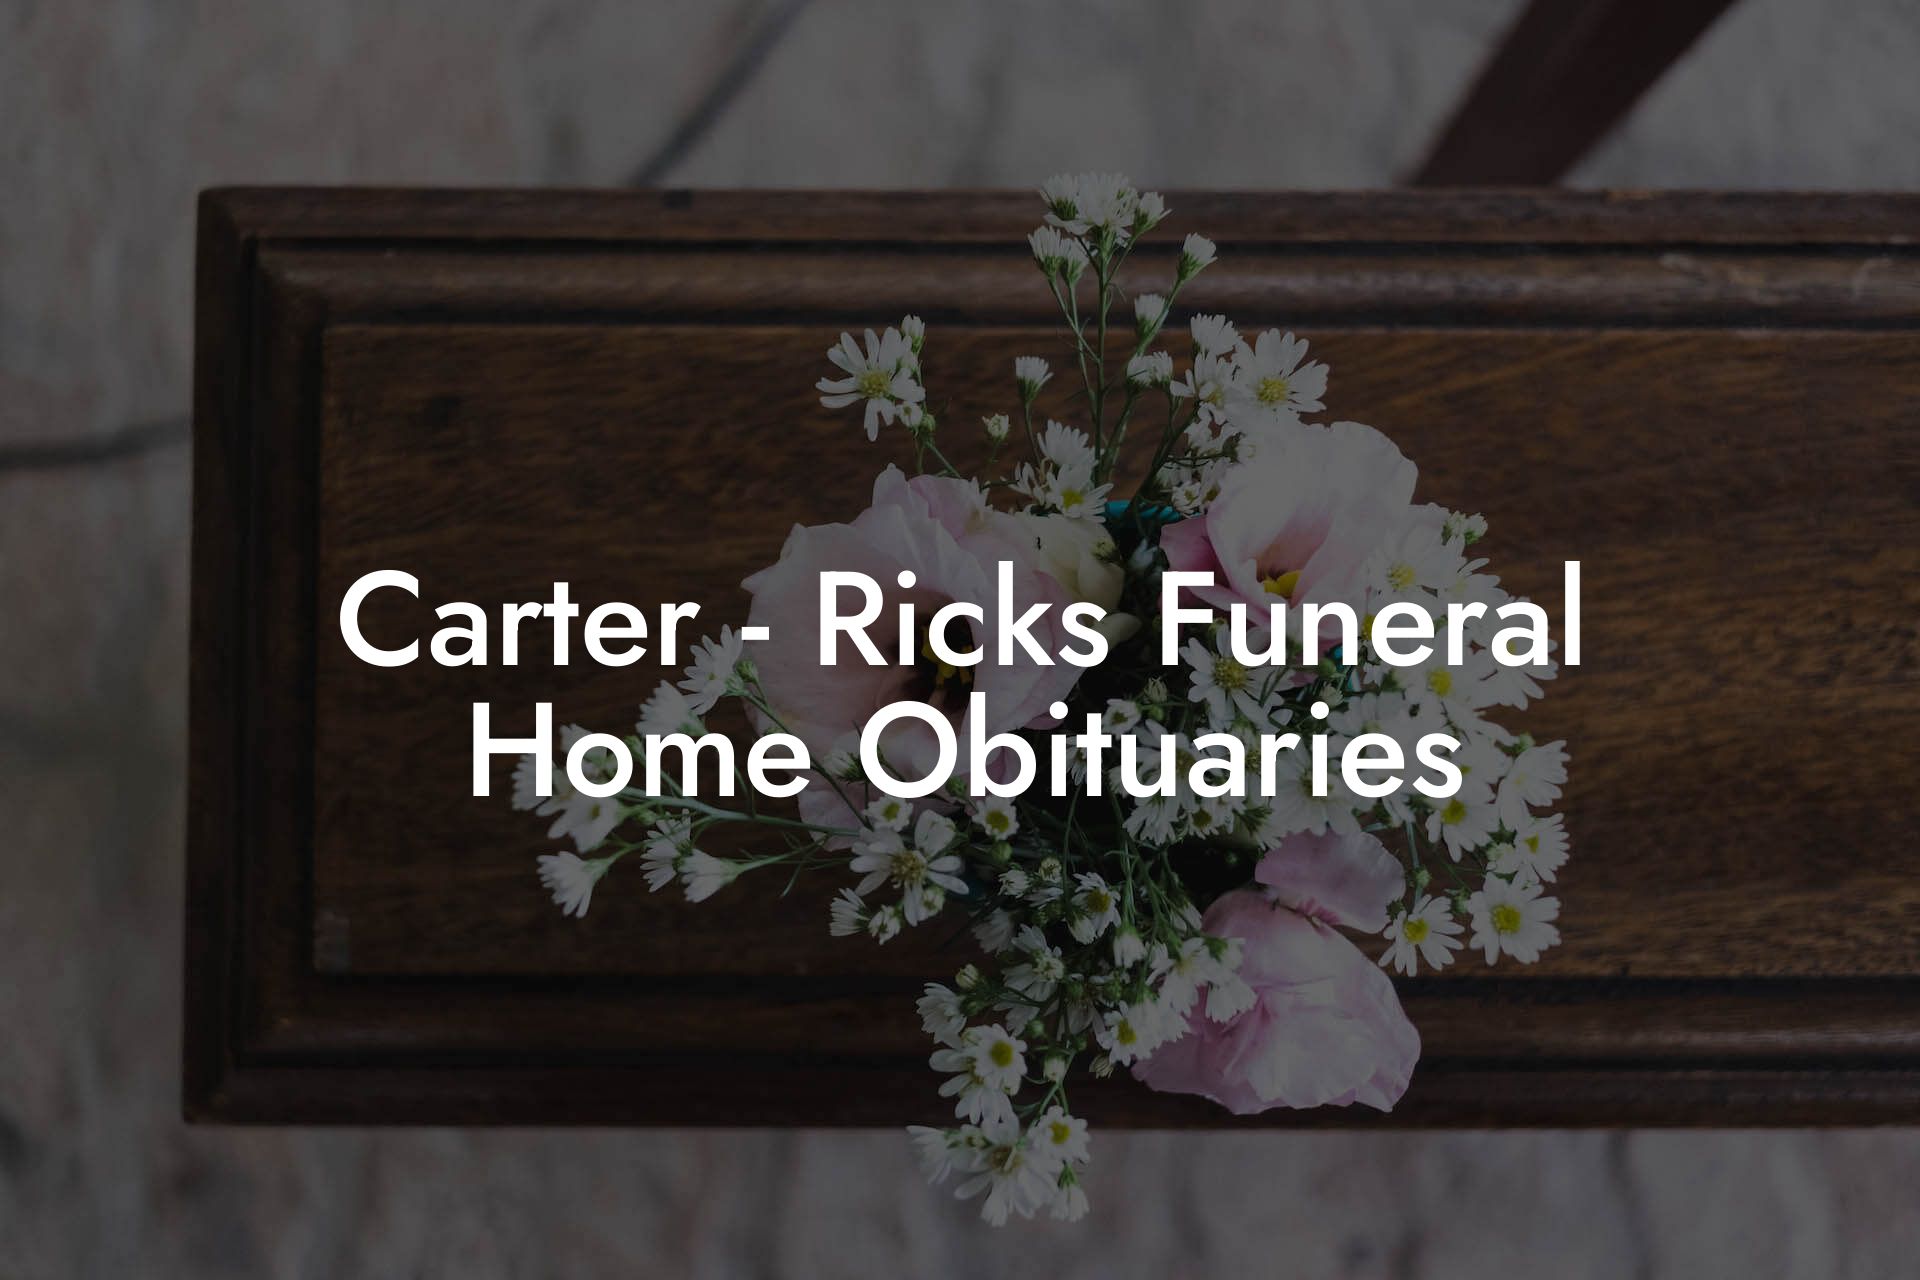 Carter - Ricks Funeral Home Obituaries